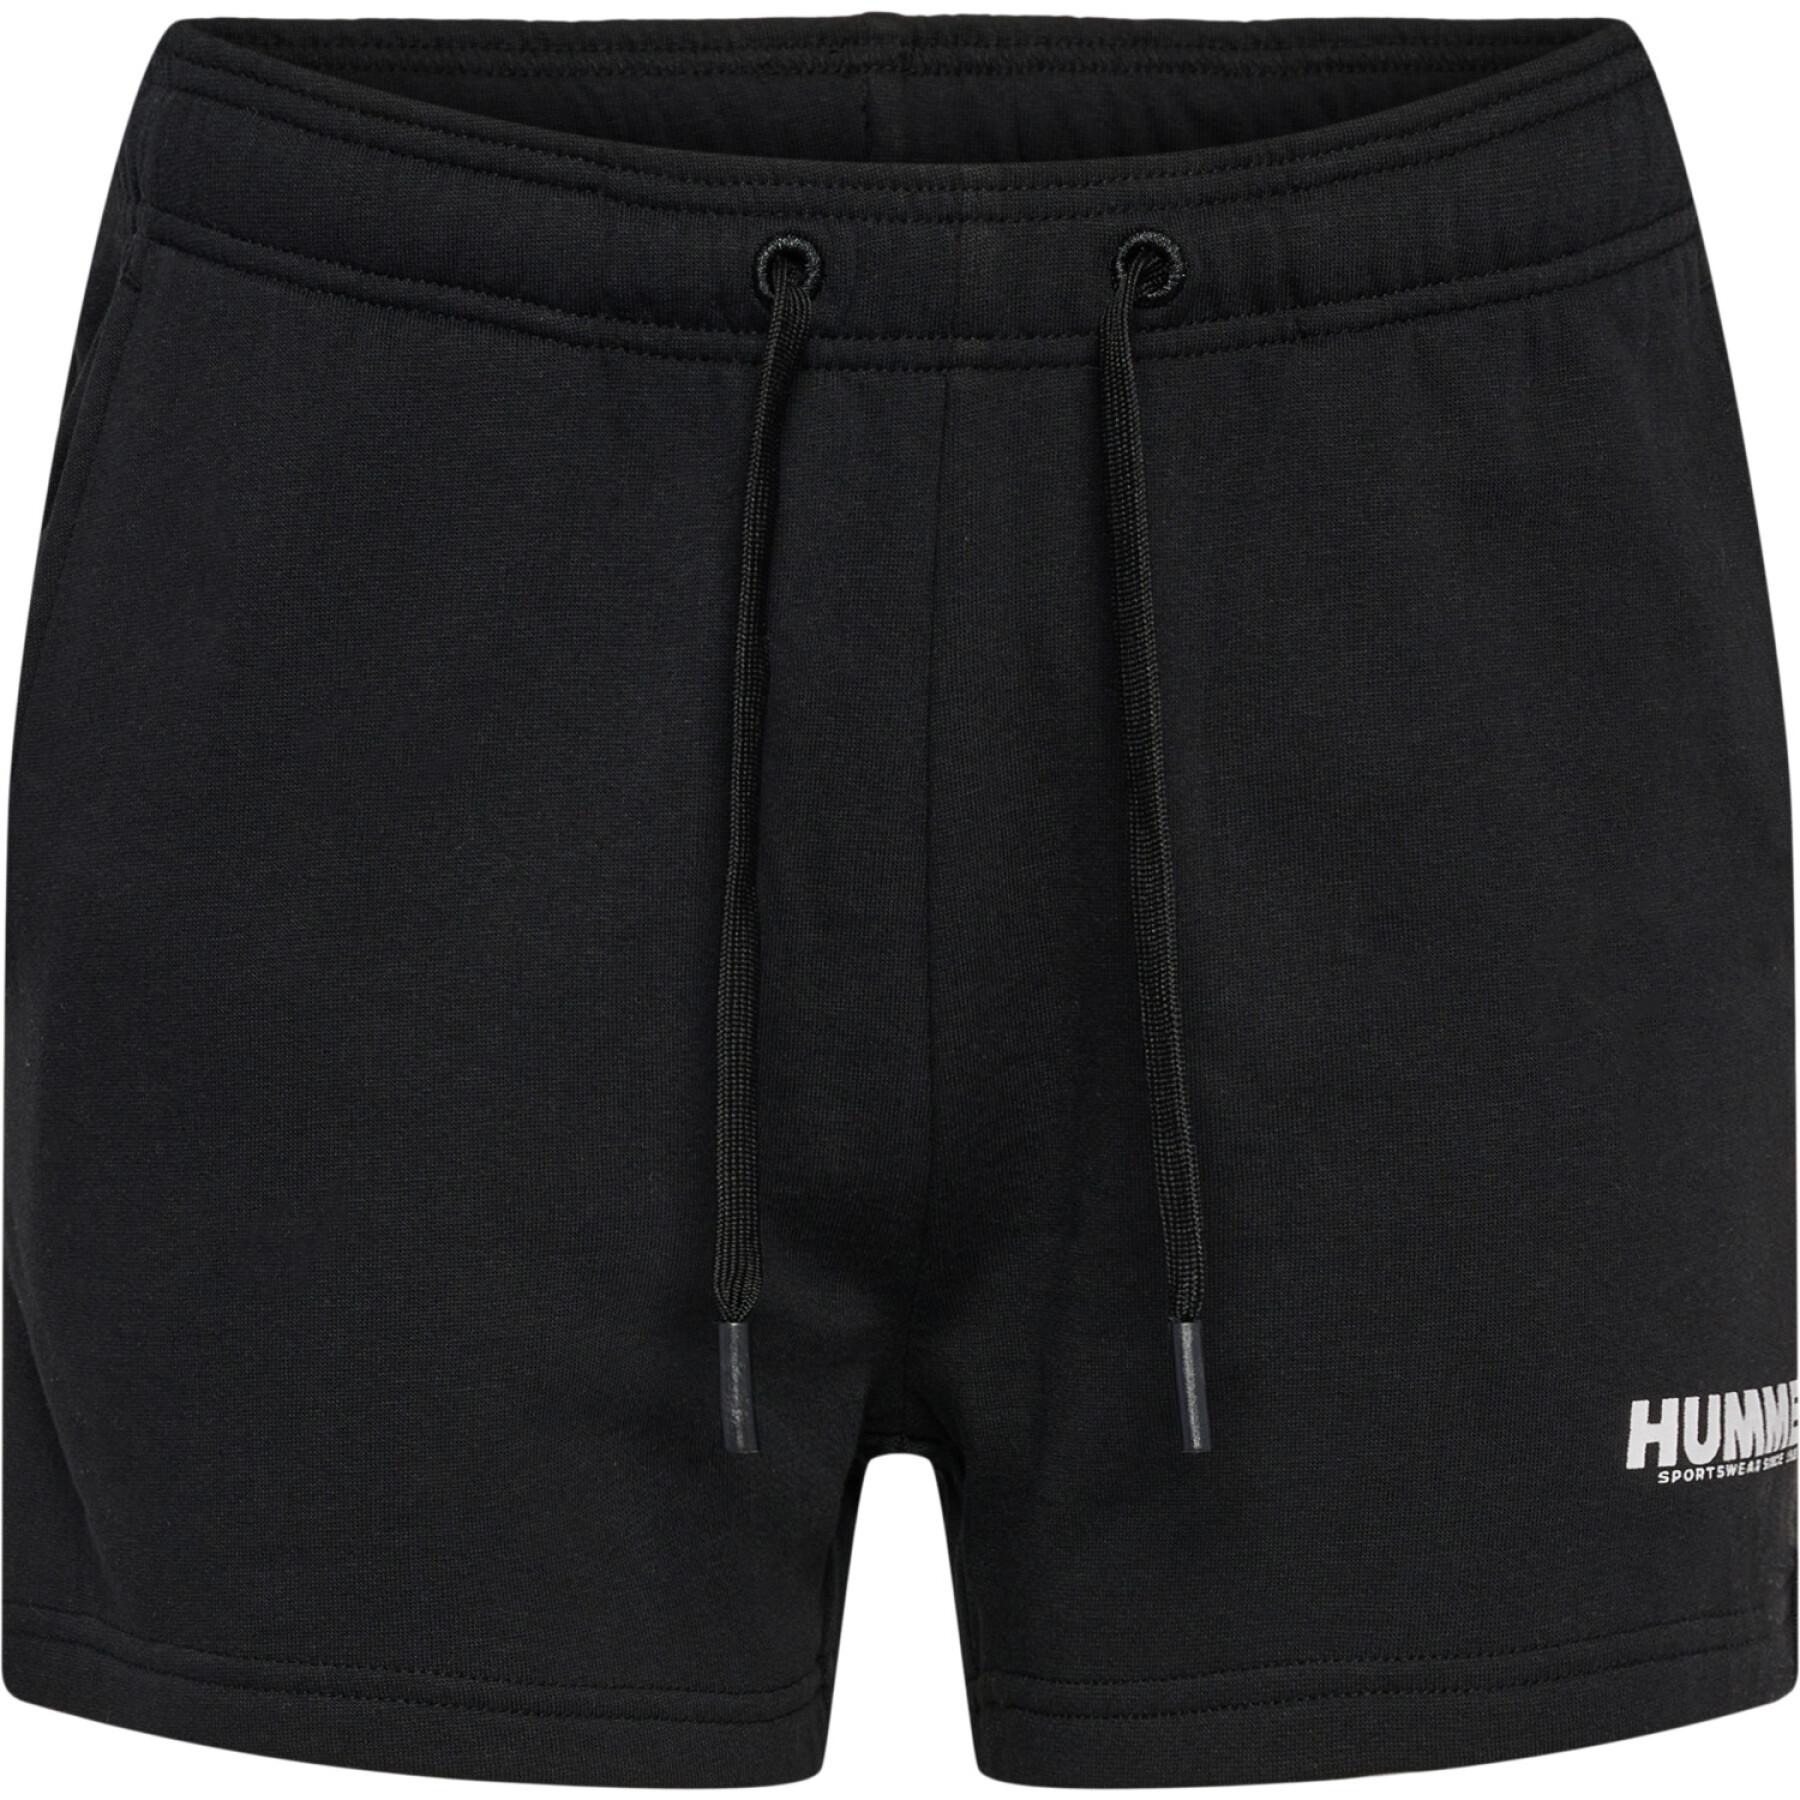 Women's shorts Hummel Legacy - Hummel - Brands - Lifestyle